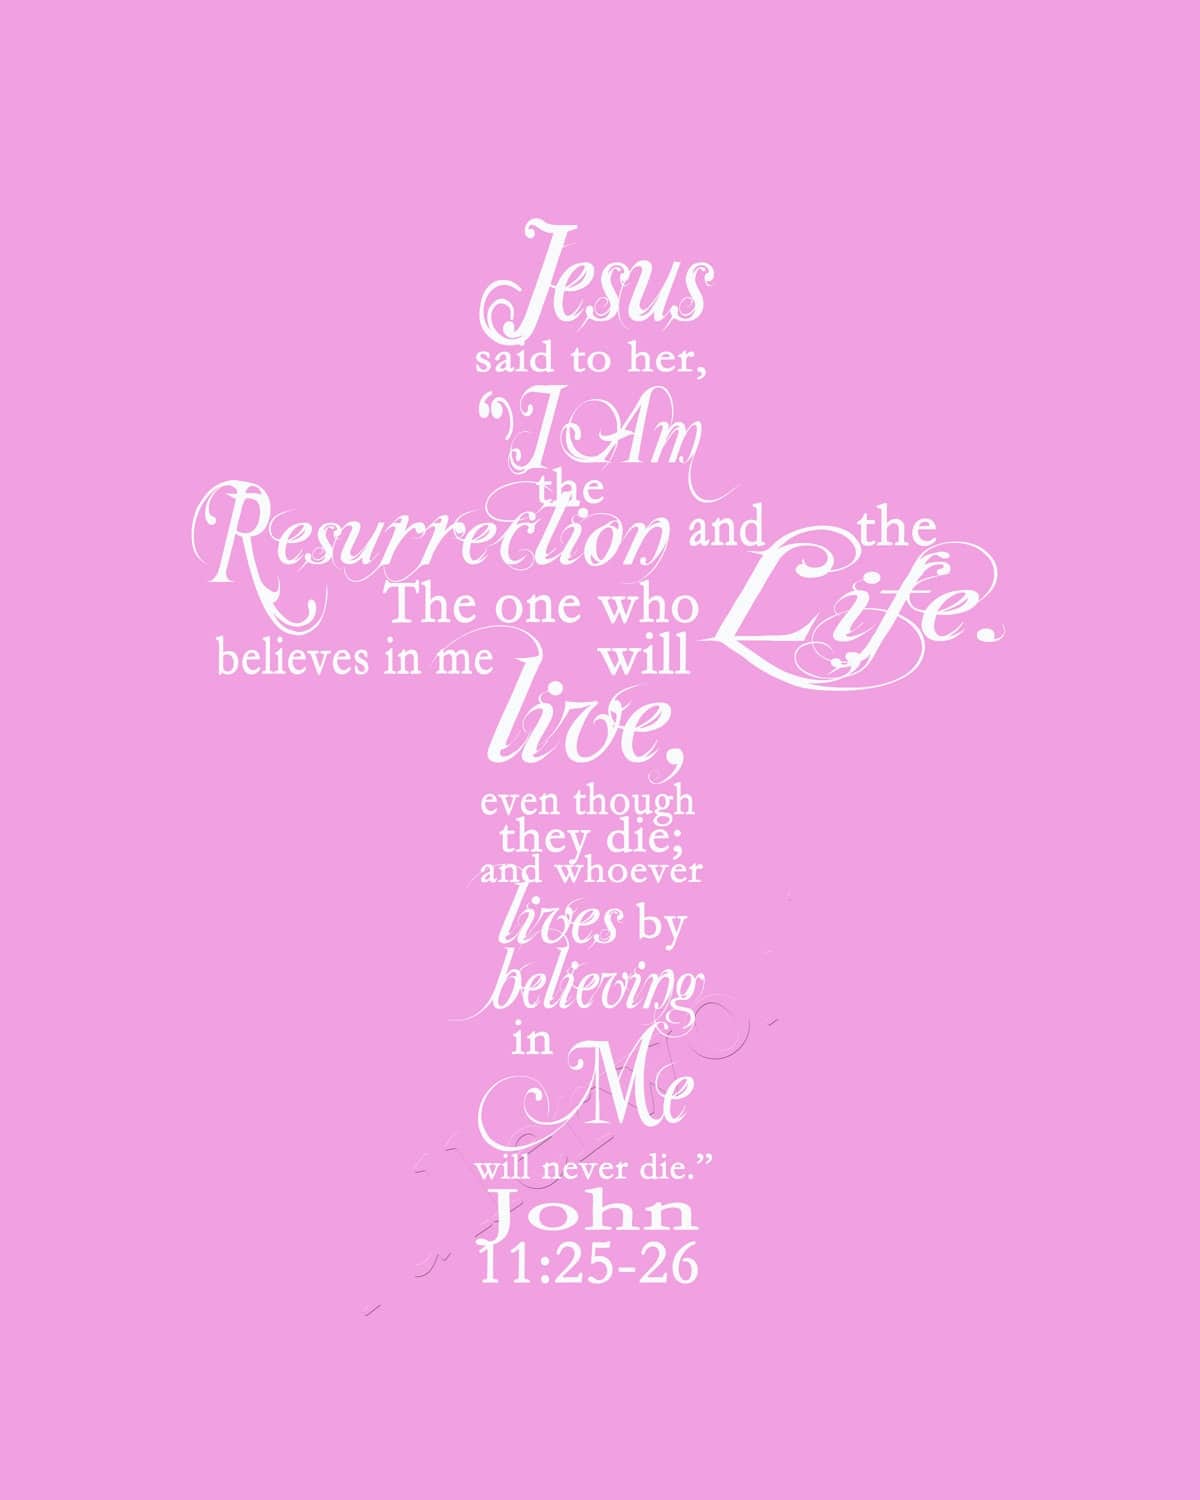 Easter Sayings